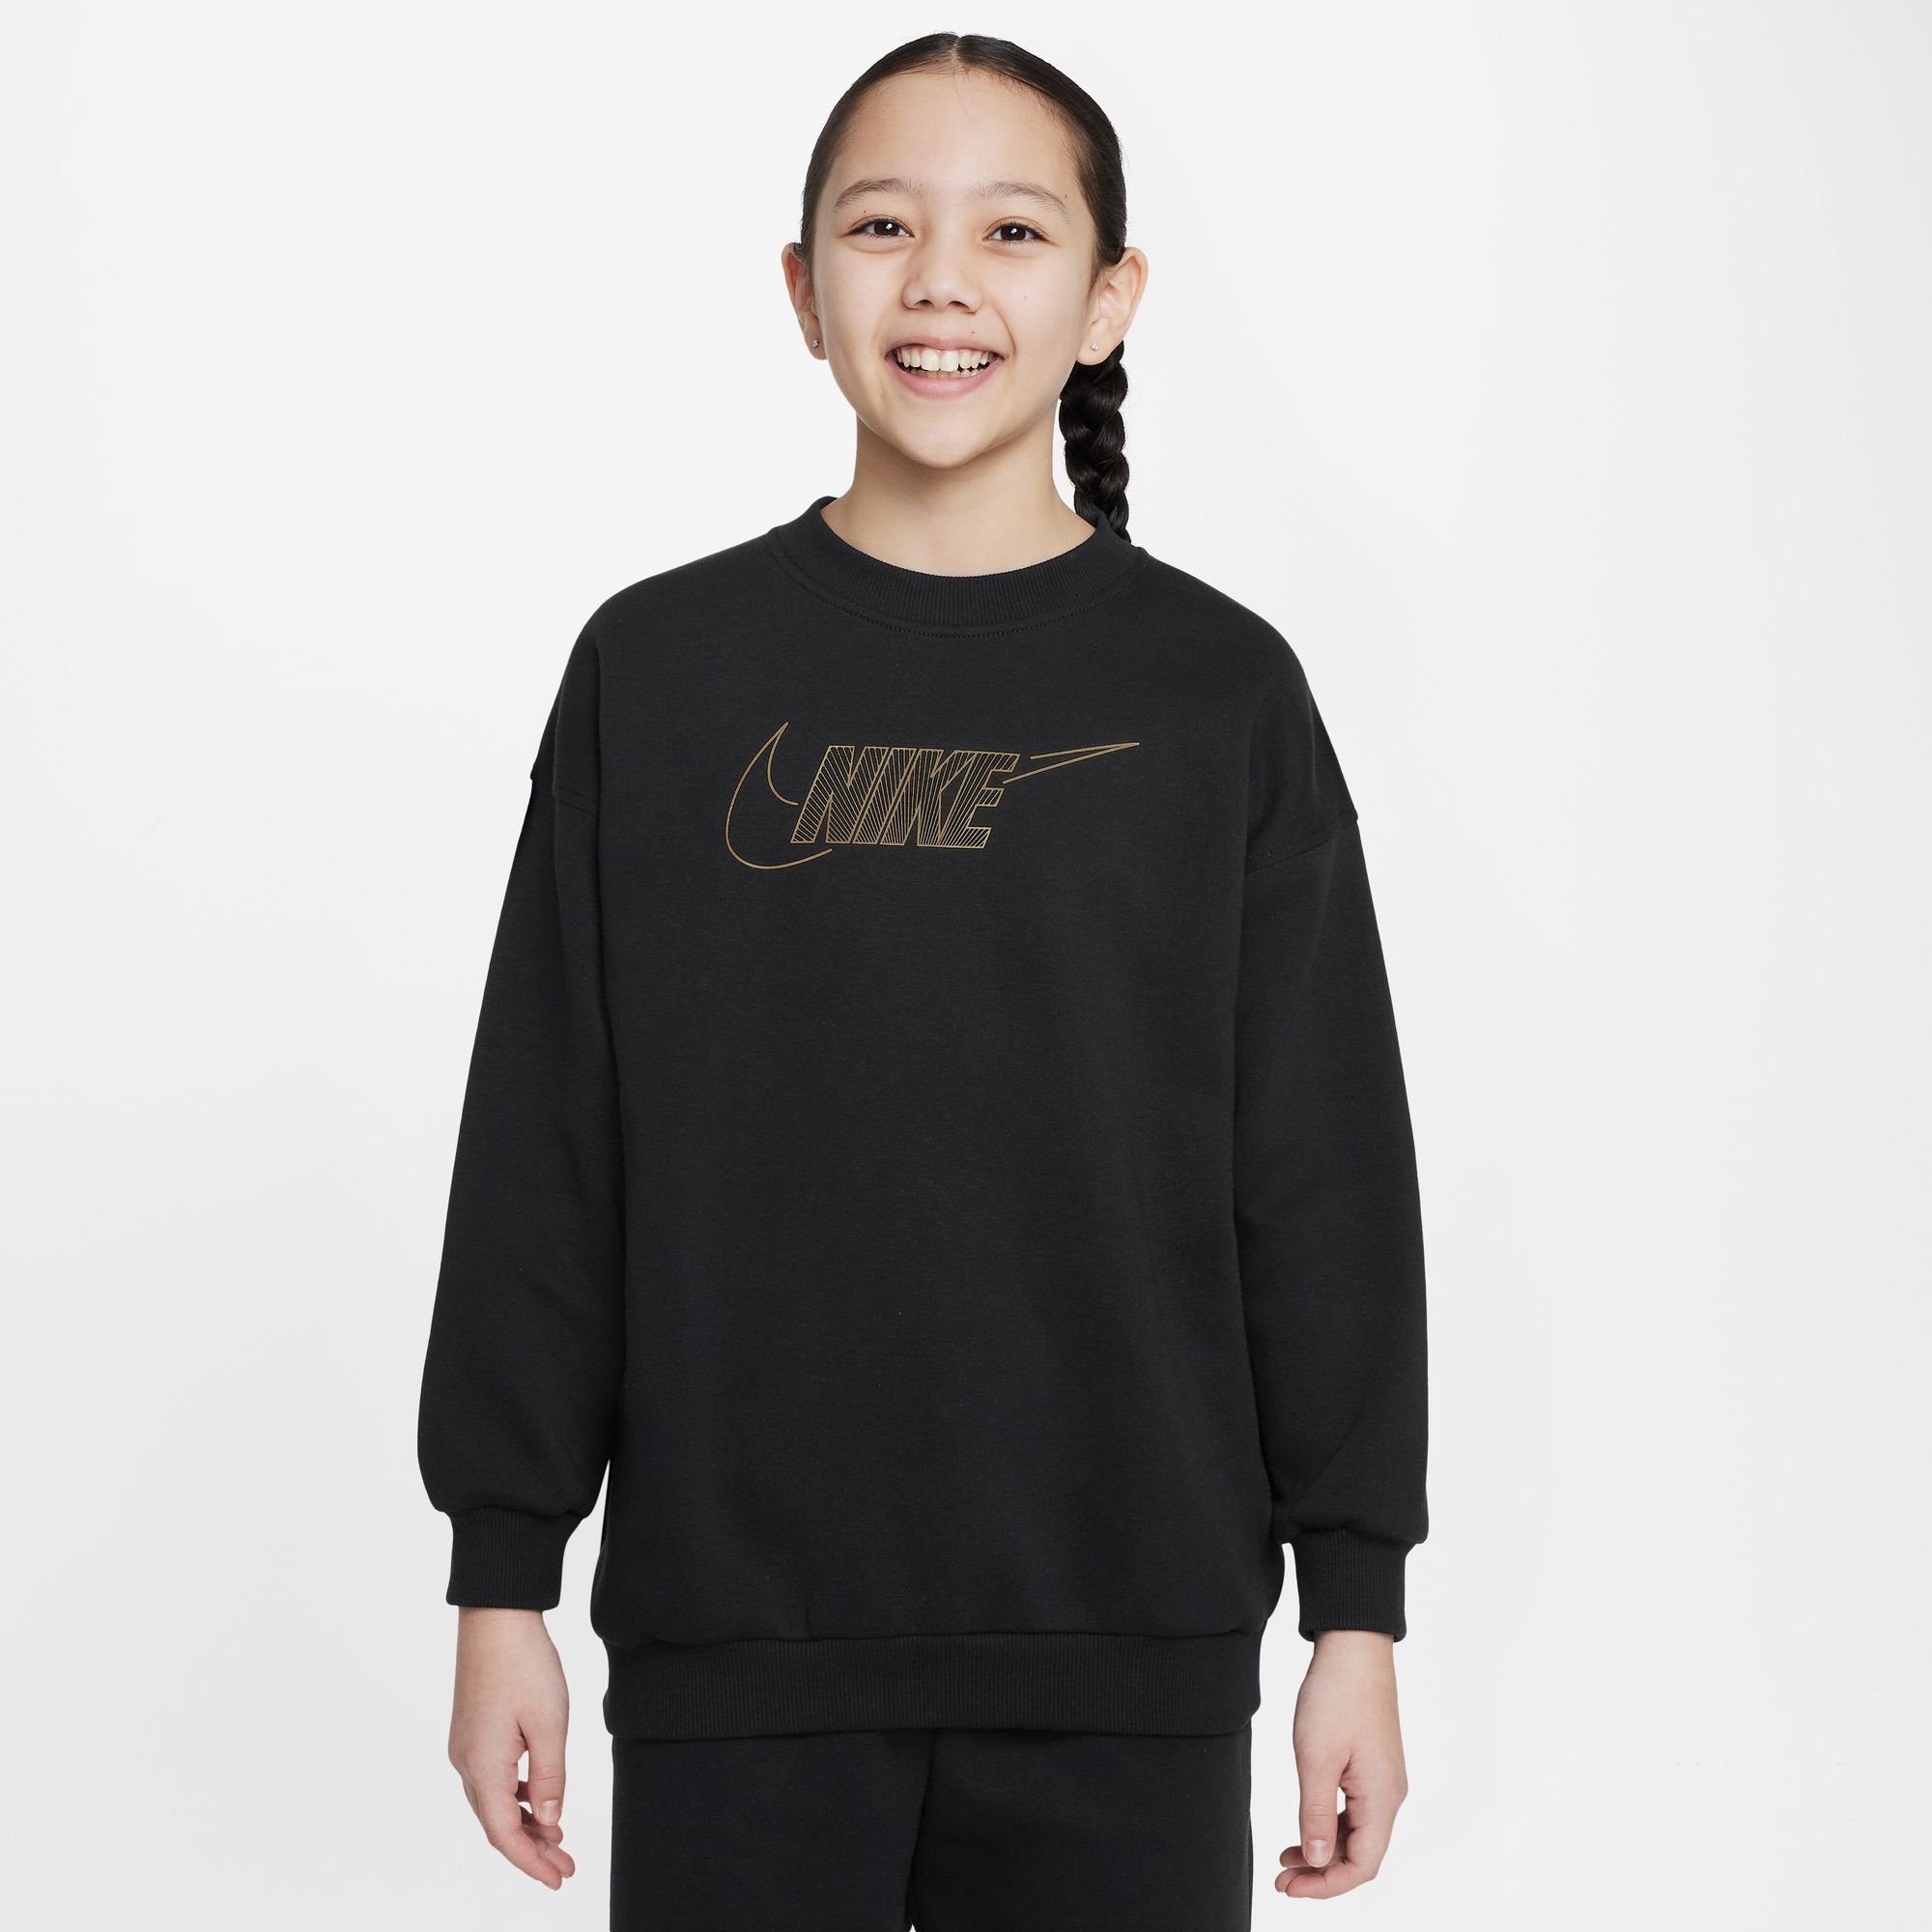 CLUB TOP BIG CREWNECK (GIRLS) KIDS' BLACK/METALLIC Sweatshirt Sportswear GOLD Nike FLEECE